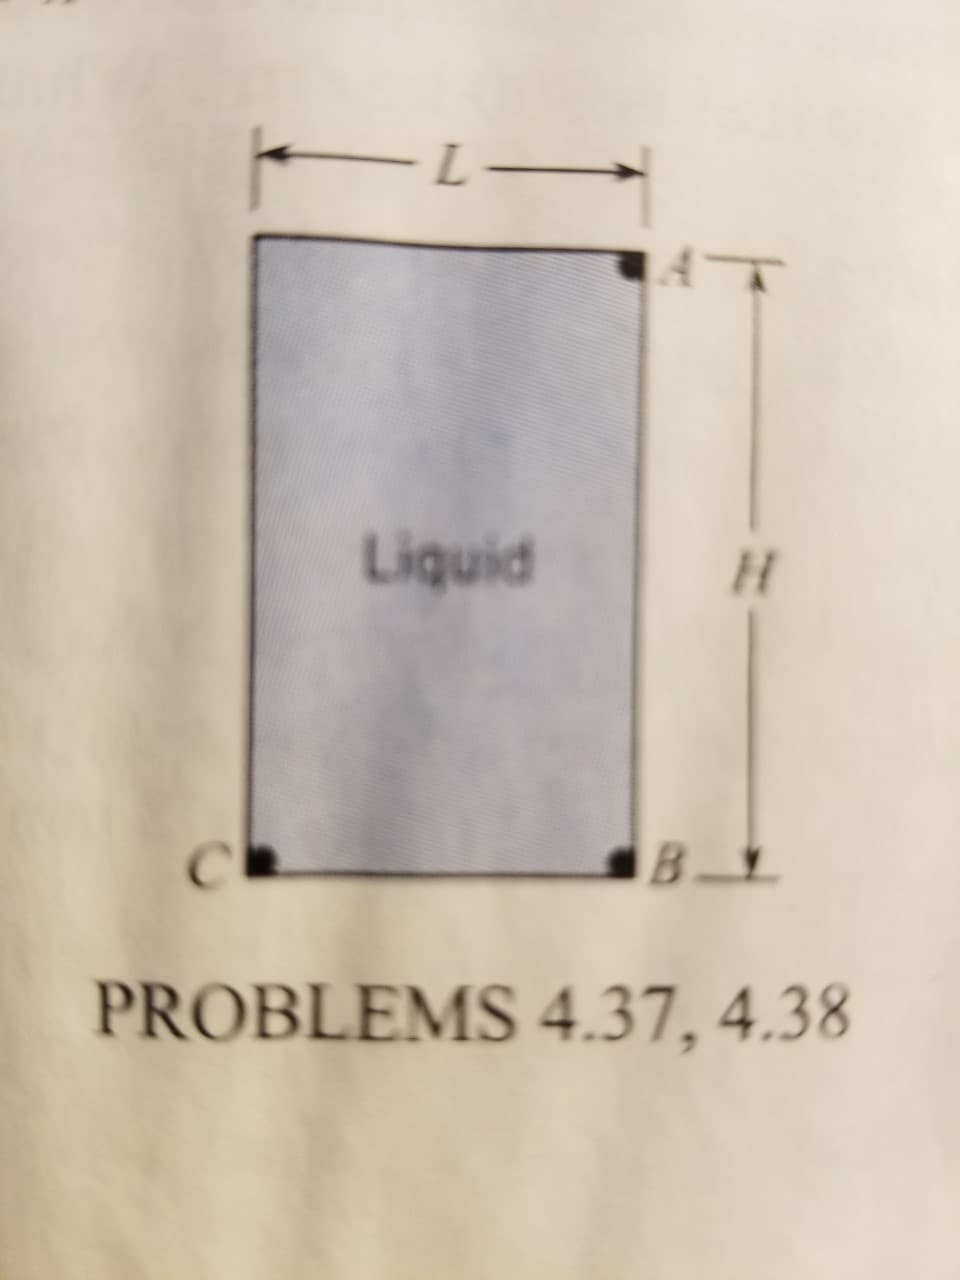 L
Liquid
BL
PROBLEMS 4.37, 4.38
